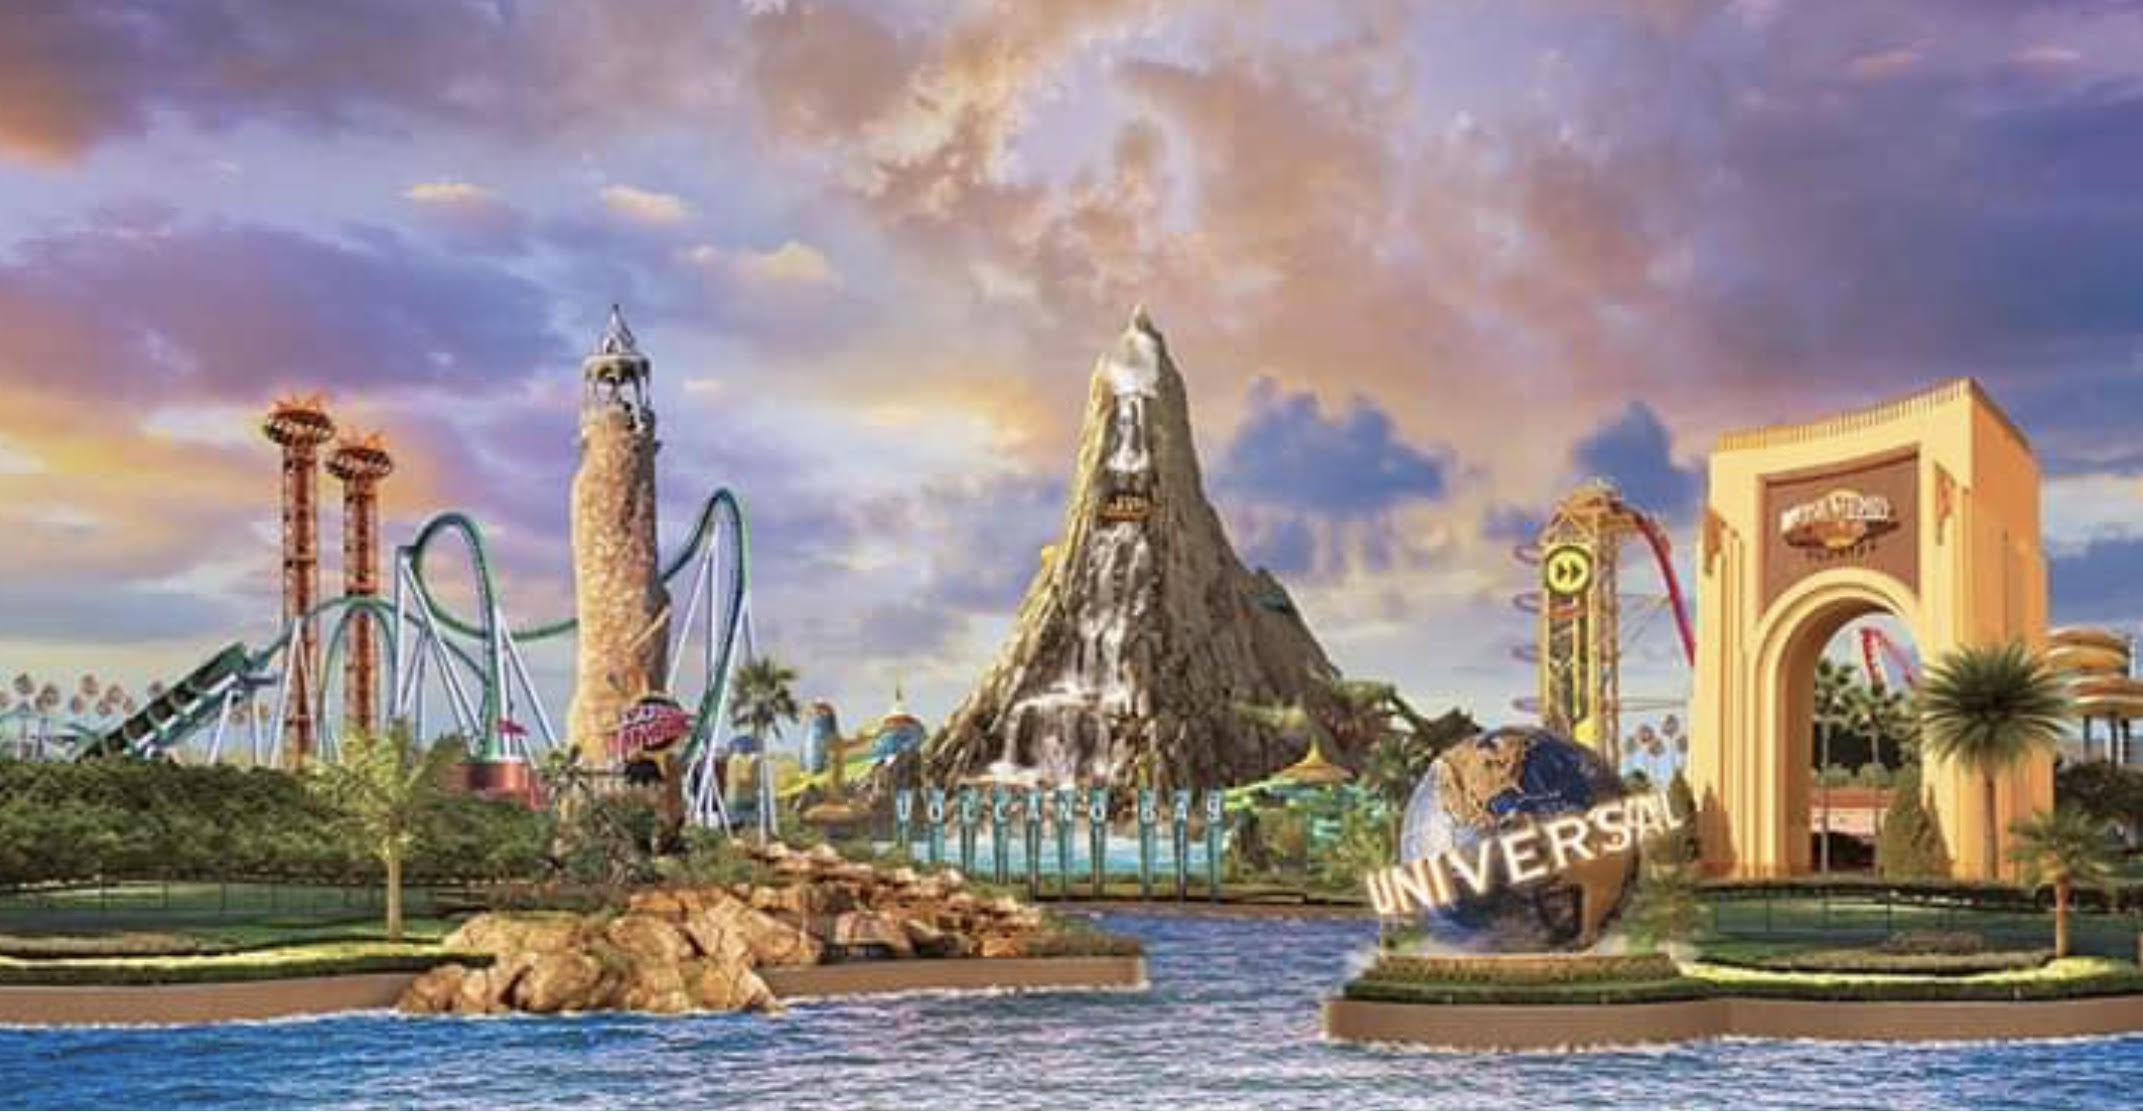 Universal Orlando Resort Looking to Hire 2500+ New Team Members